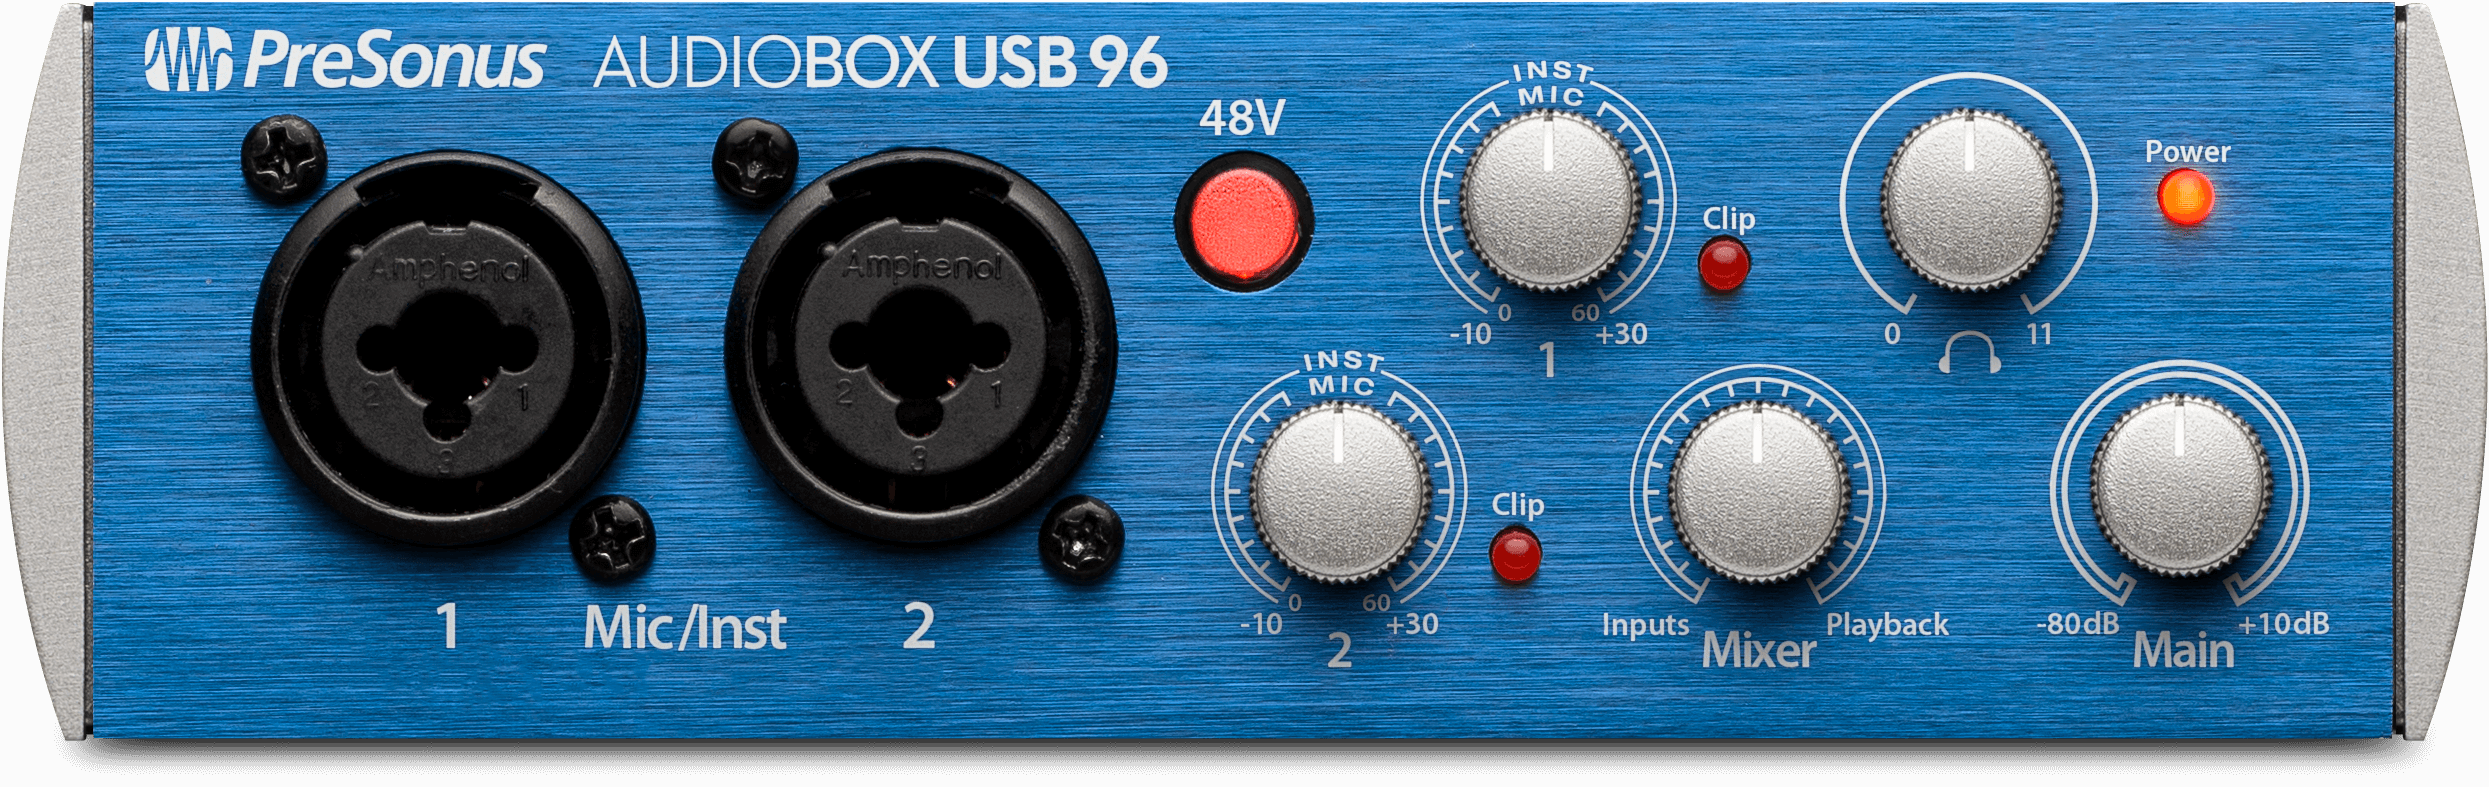 PreSonus AudioBox USB 96 and LyxPro Recording Bundle with Studio One 3 Artist Software